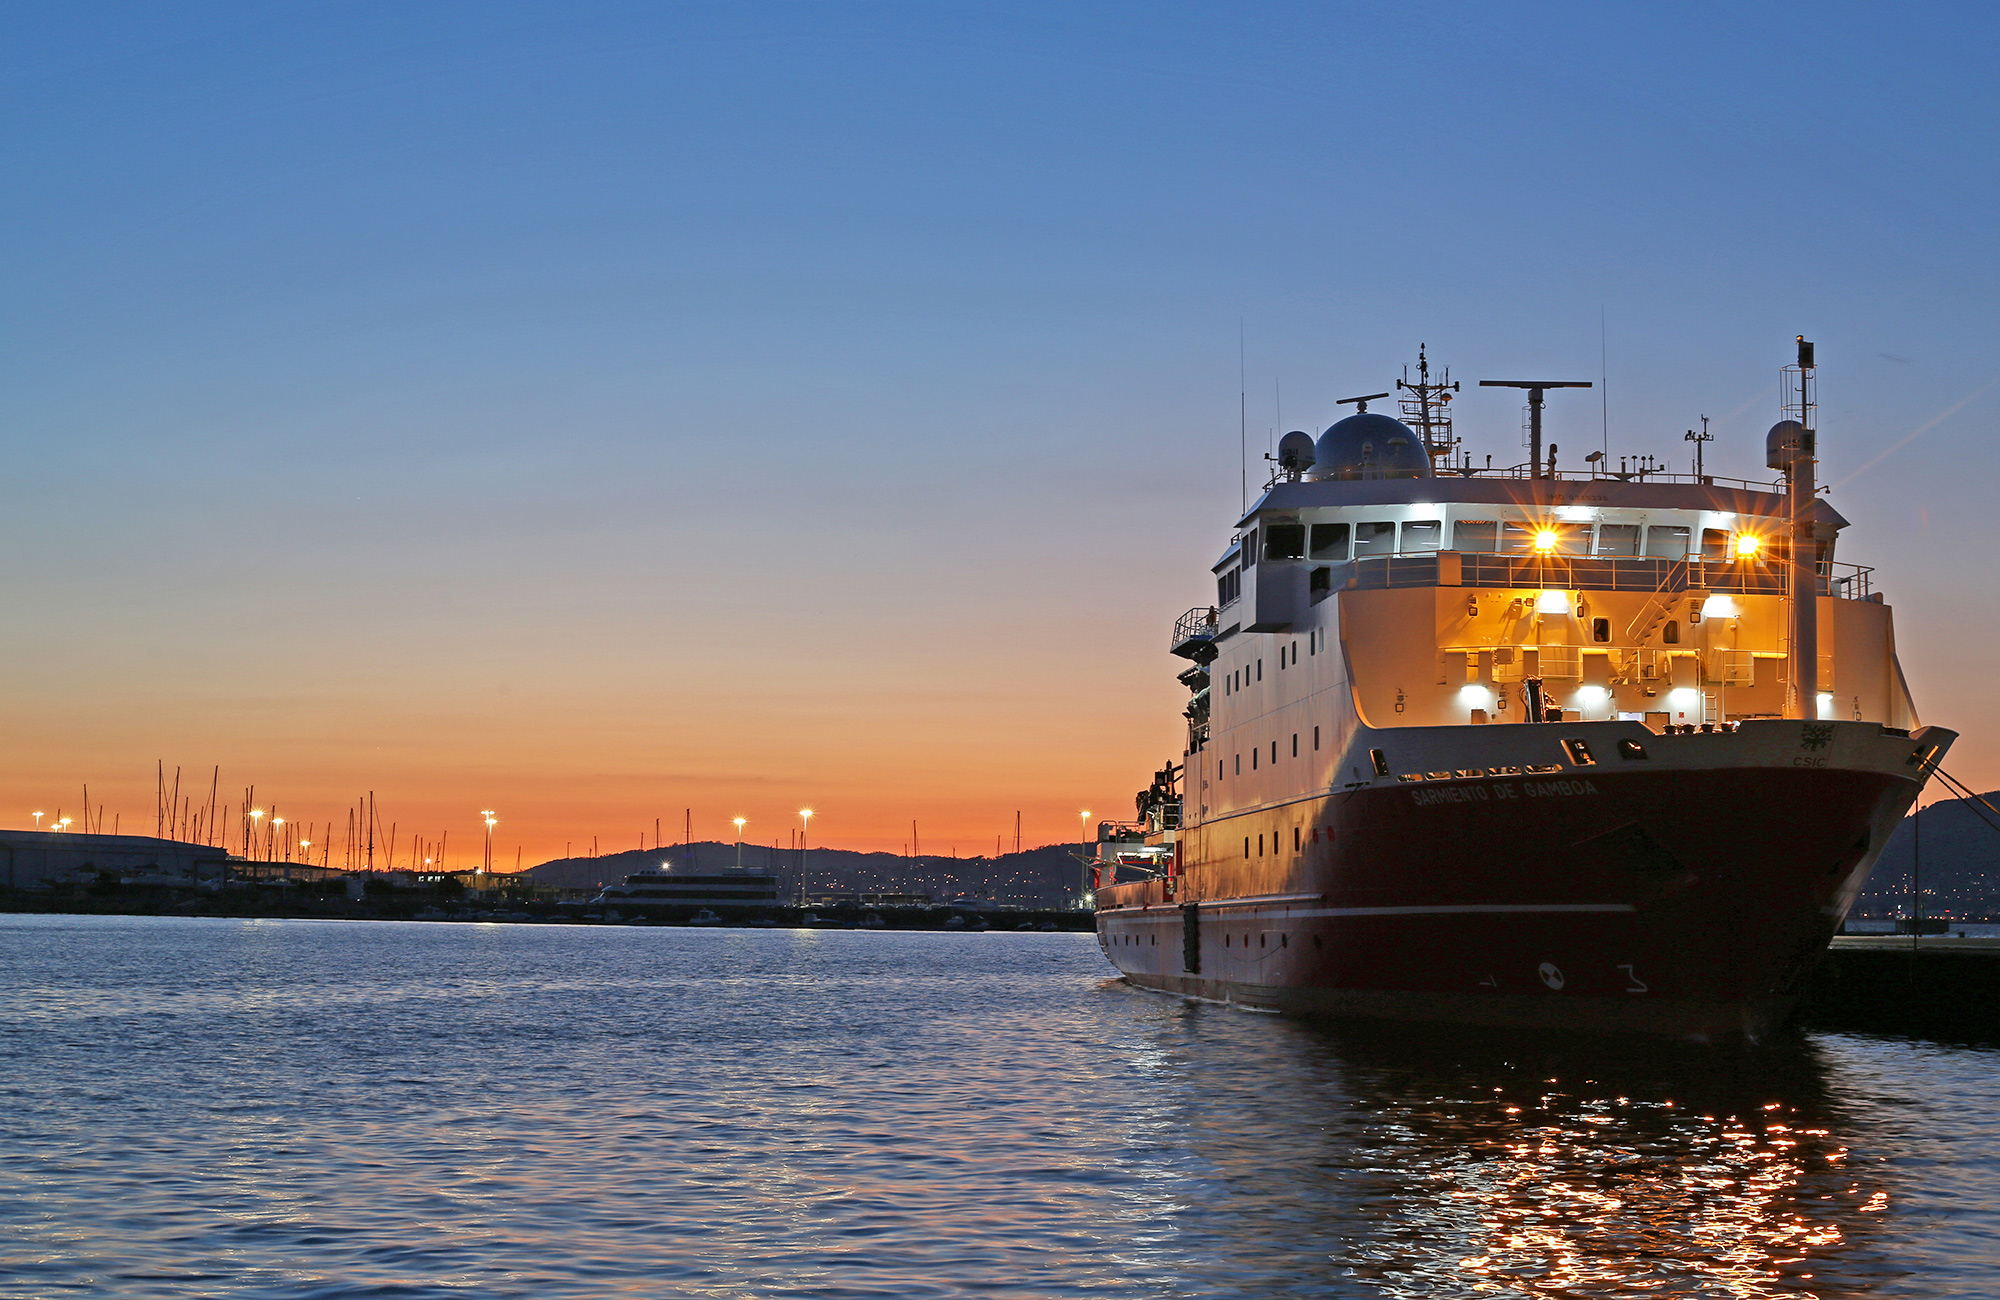 The R/V Sarmiento de Gamboa lights up the port while docked in Vigo, Spain.